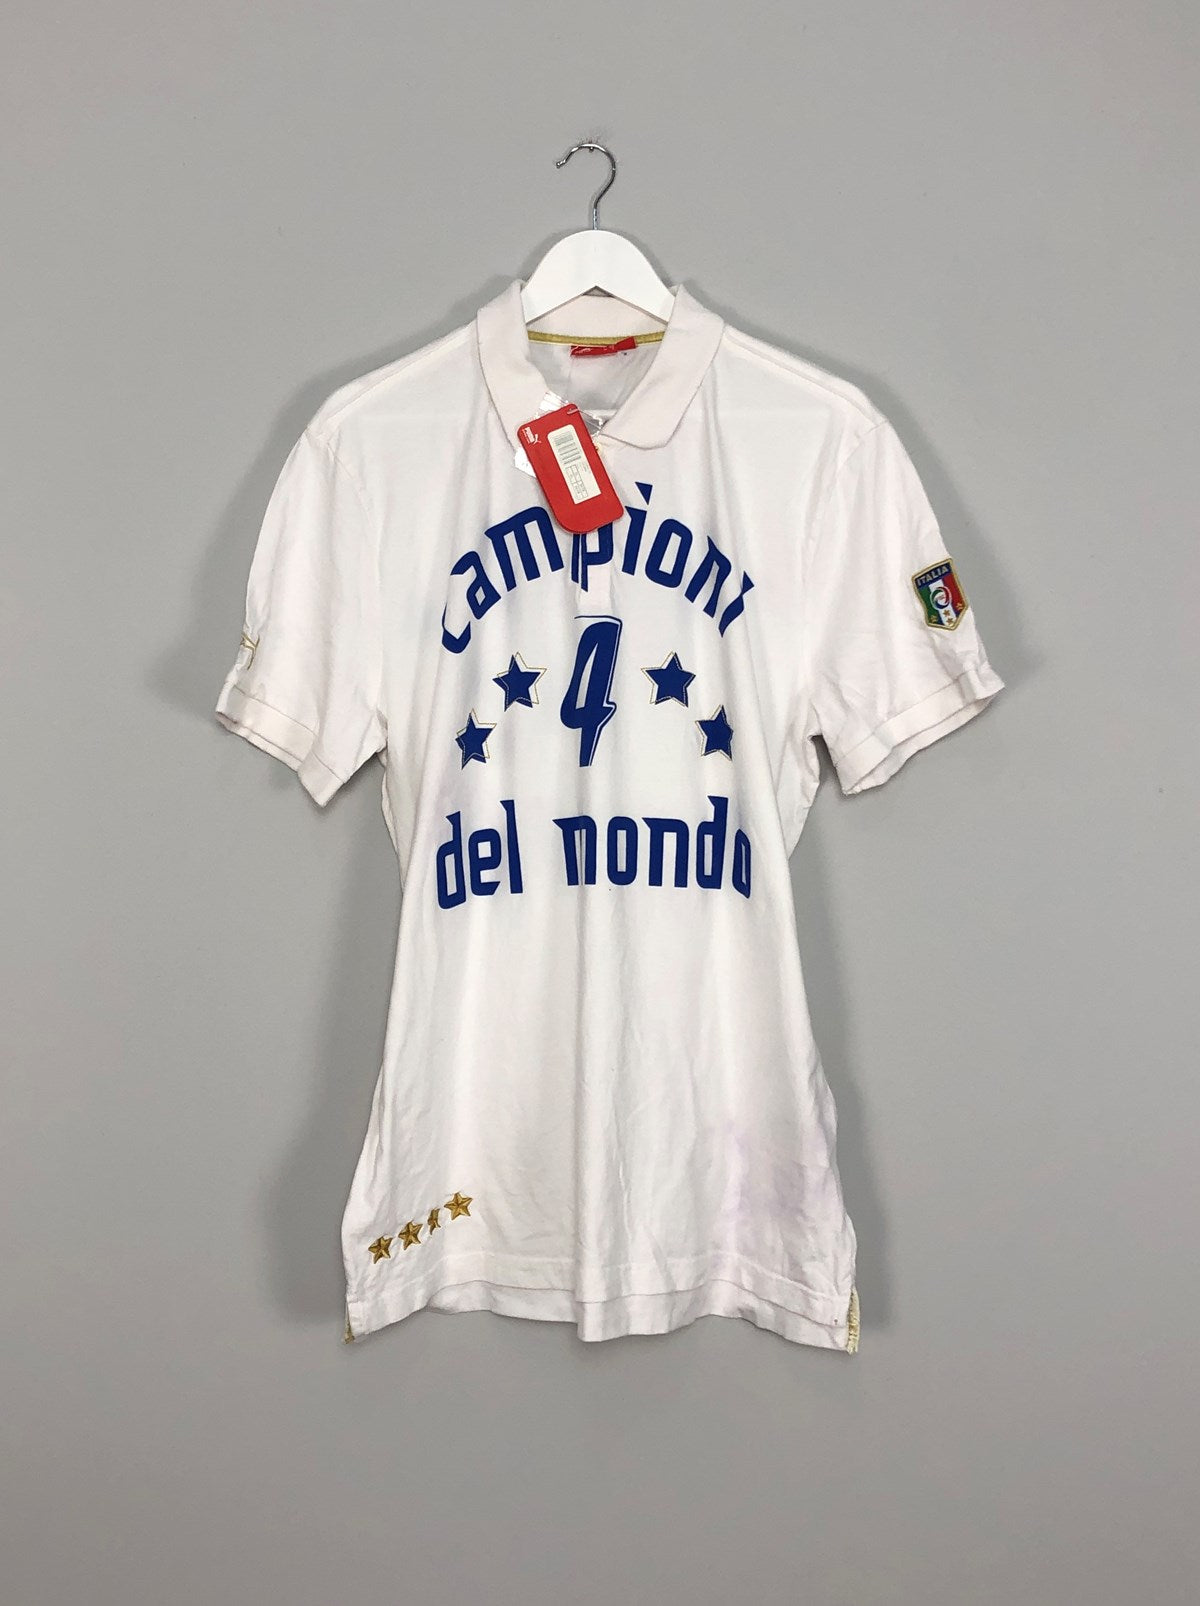 2006 ITALY *BNWT* ’CAMPIONI DEL MONDO’ PUMA POLO SHIRT (XL)